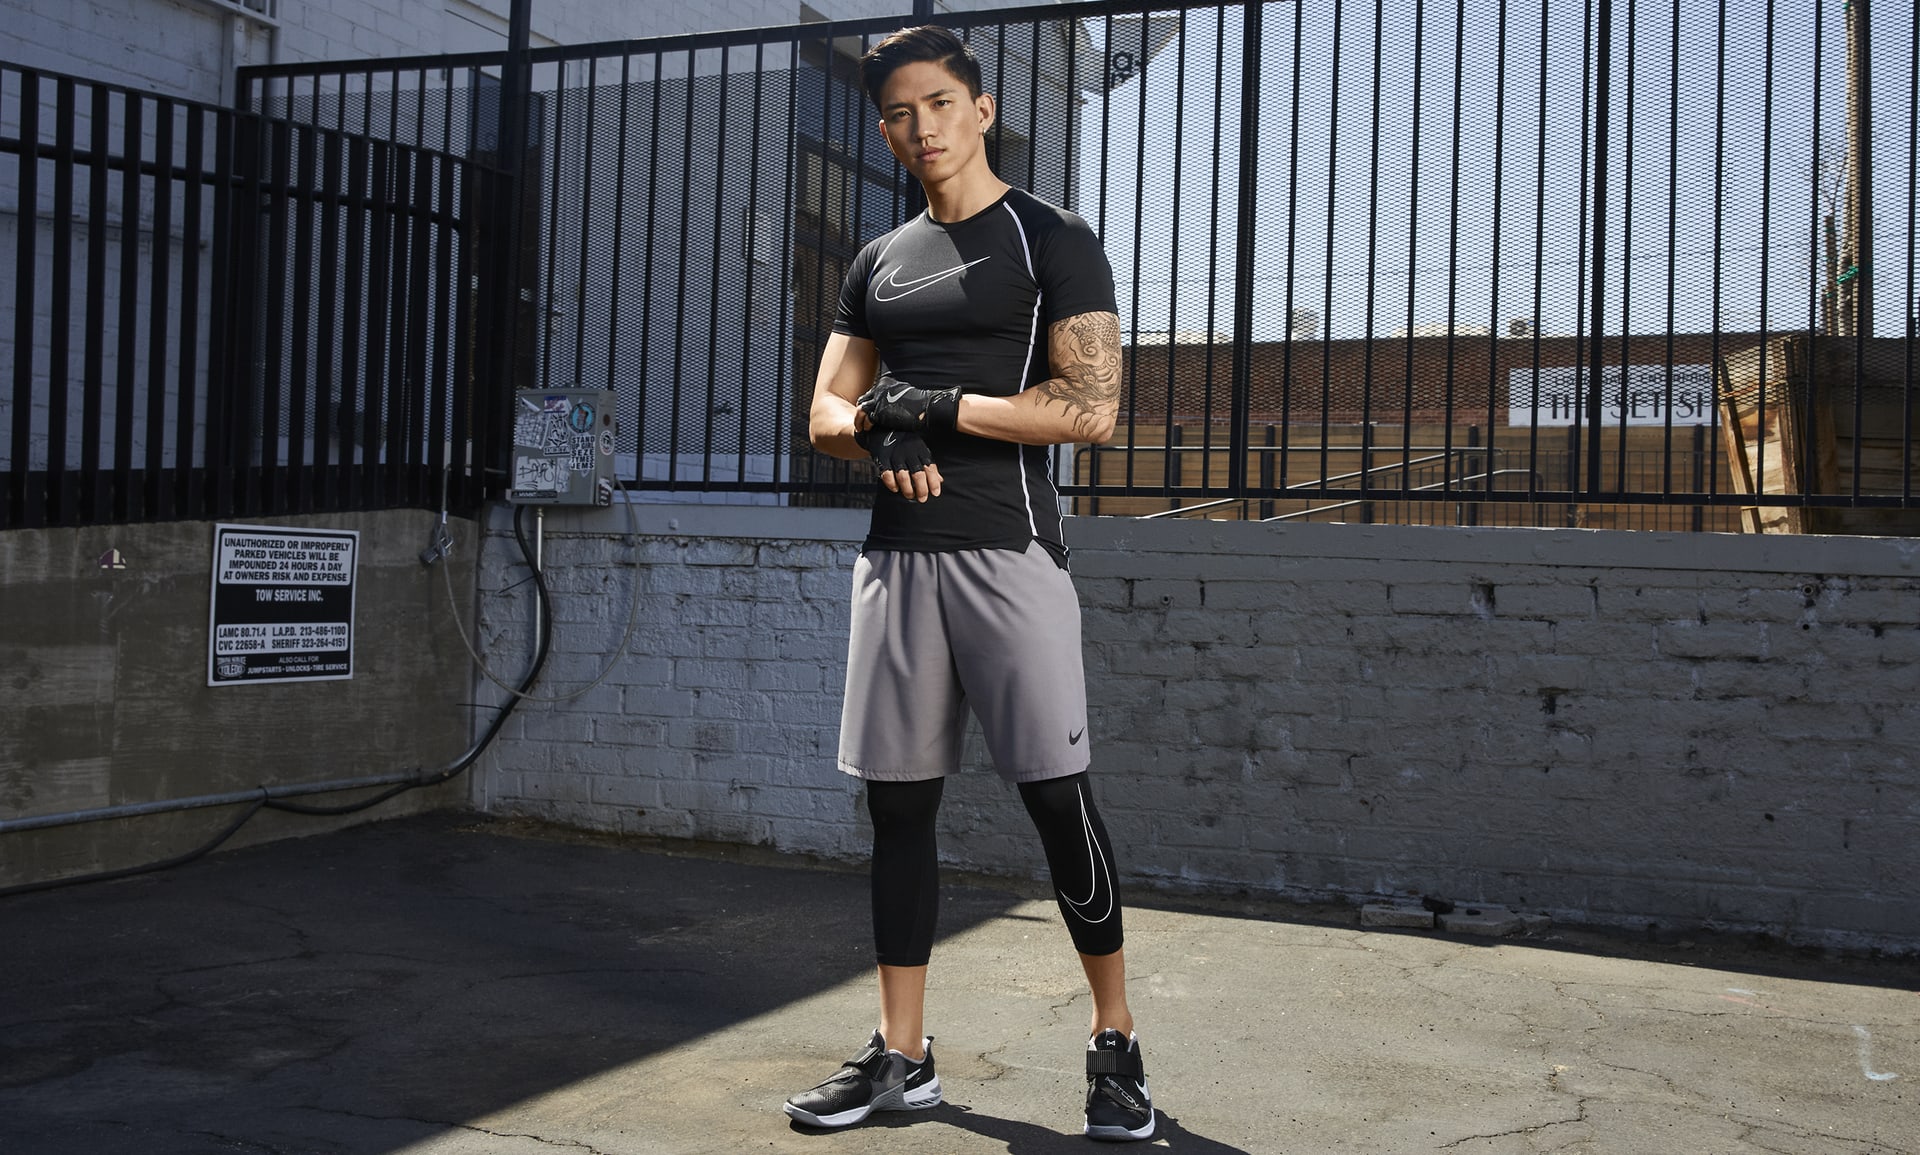 Nike Pro Short Sleeve Compression Top - Atlantic Sportswear